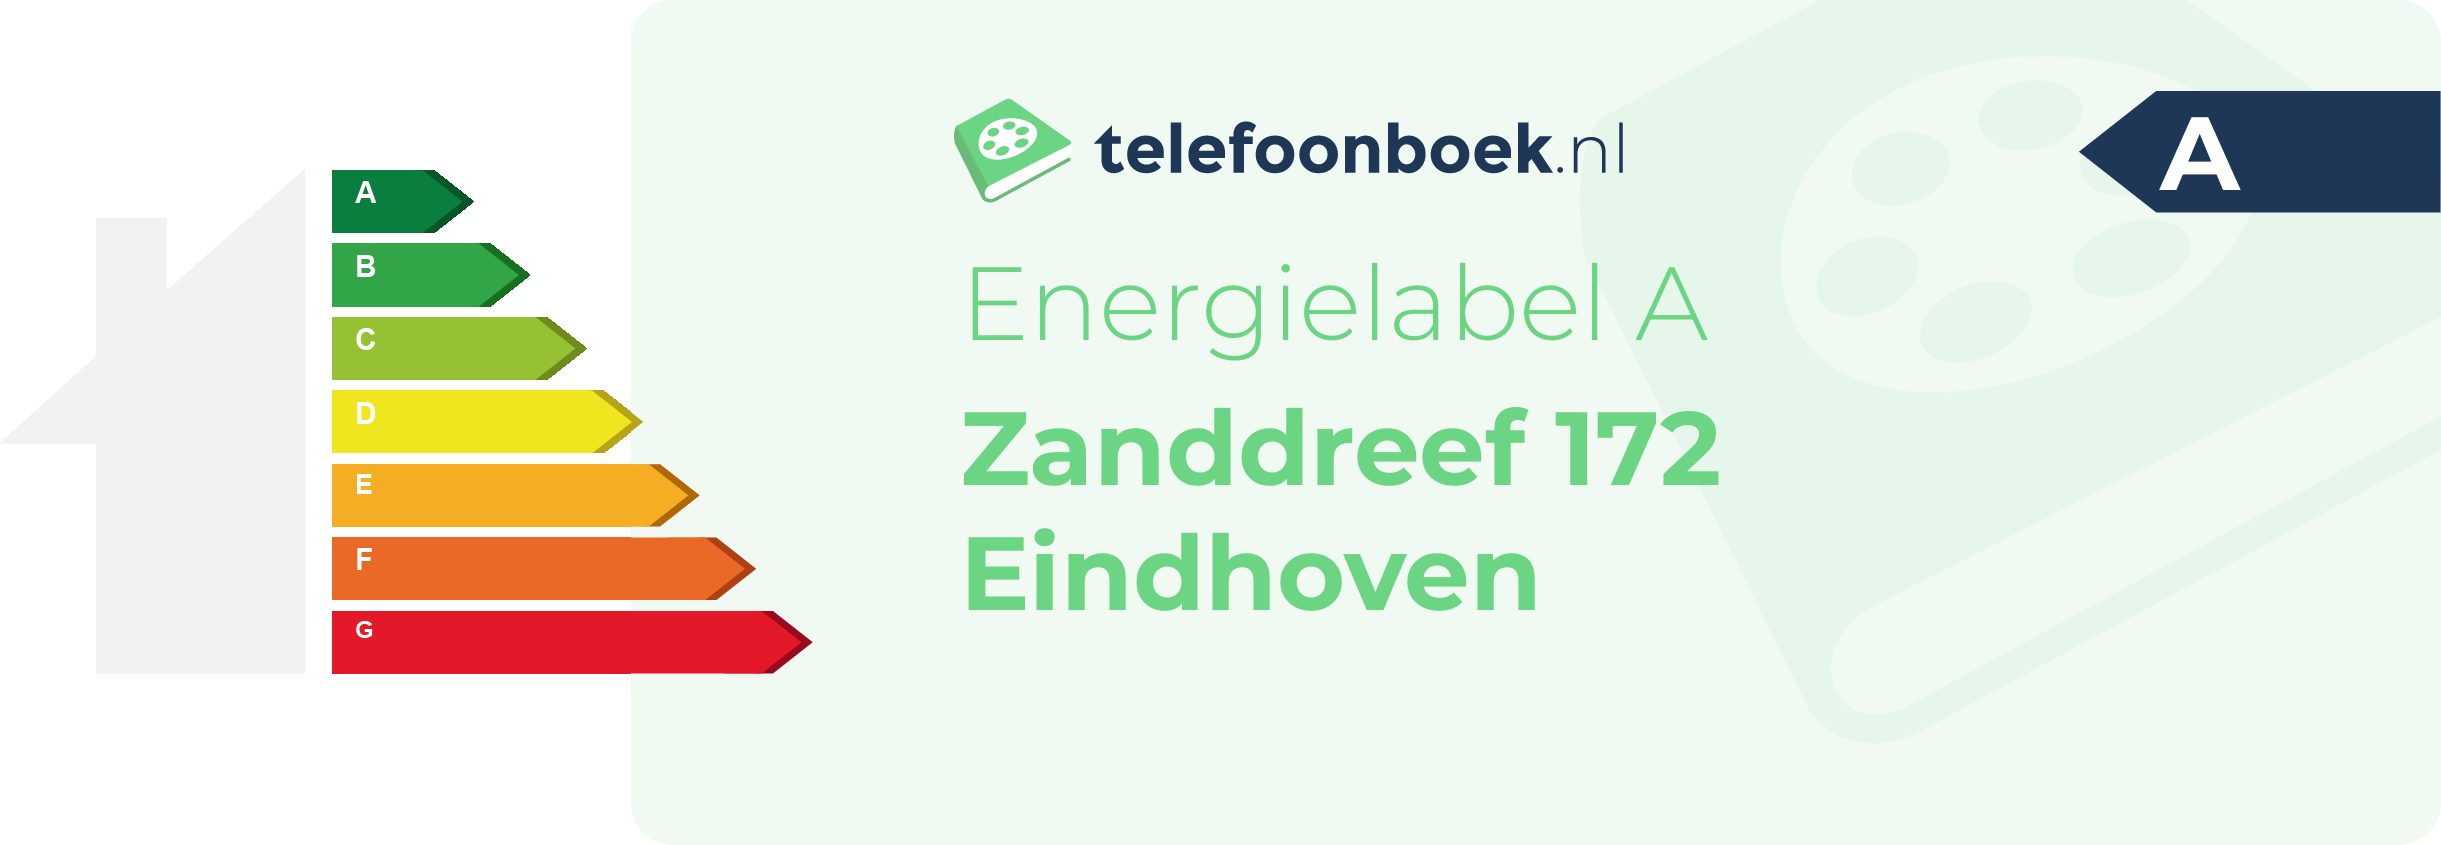 Energielabel Zanddreef 172 Eindhoven